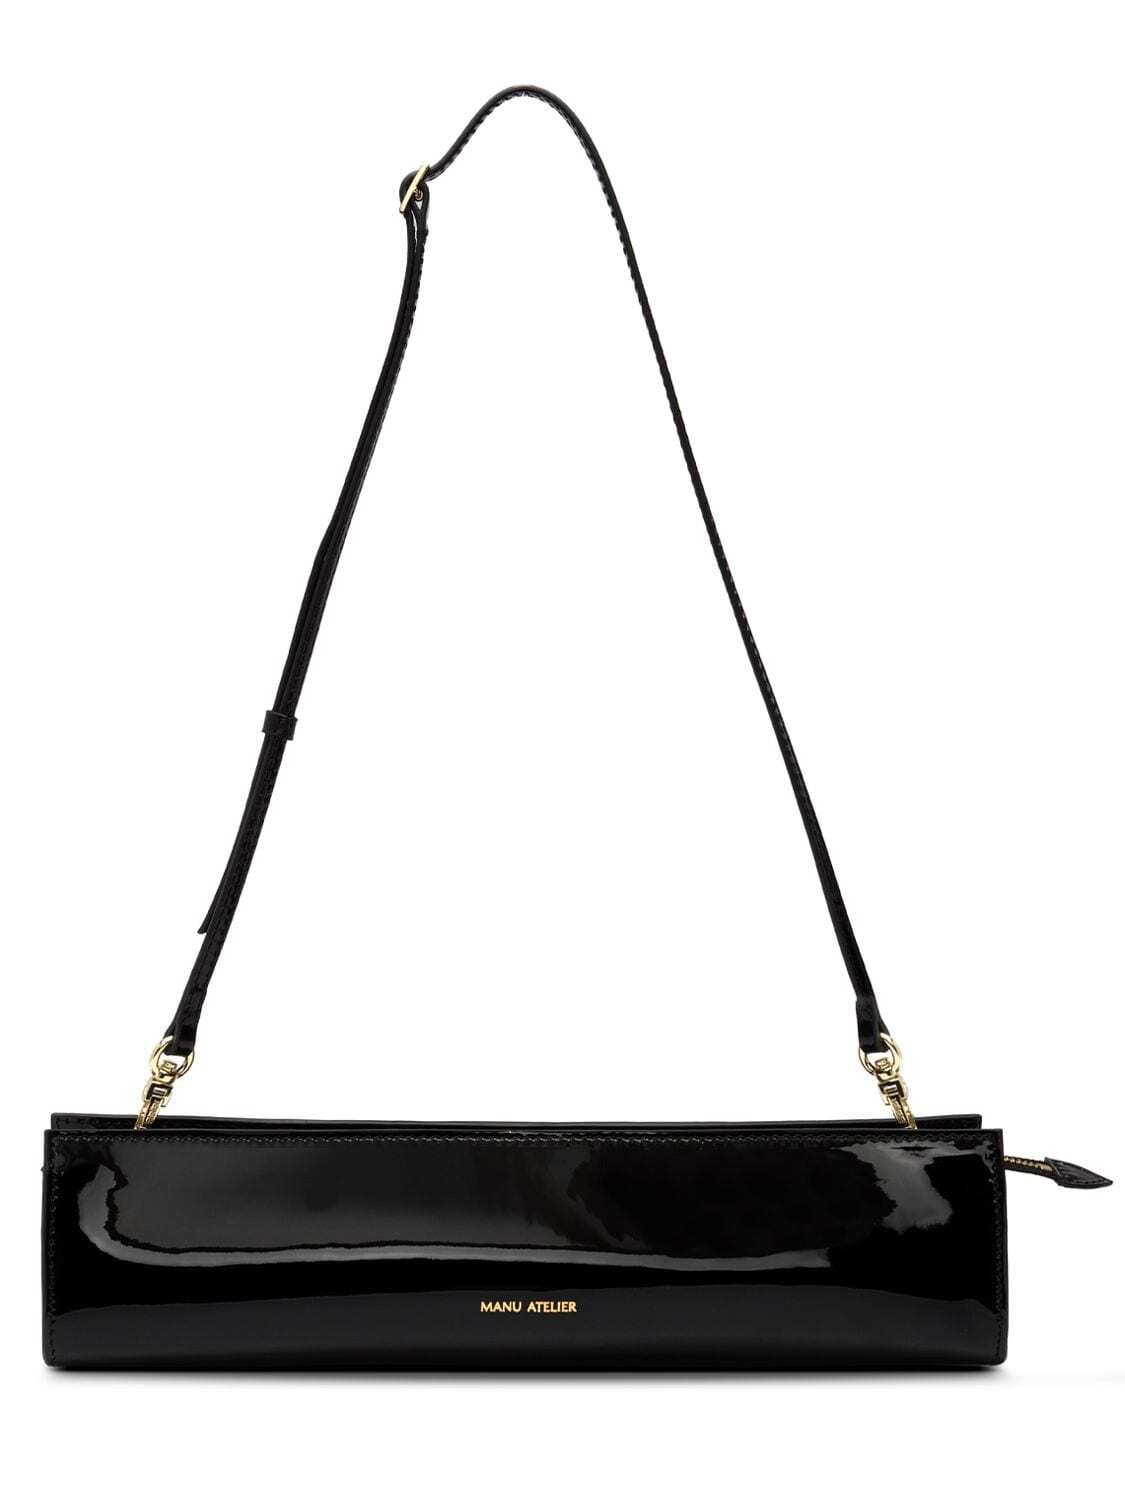 MANU ATELIER Pencil Box Patent Leather Shoulder Bag in black